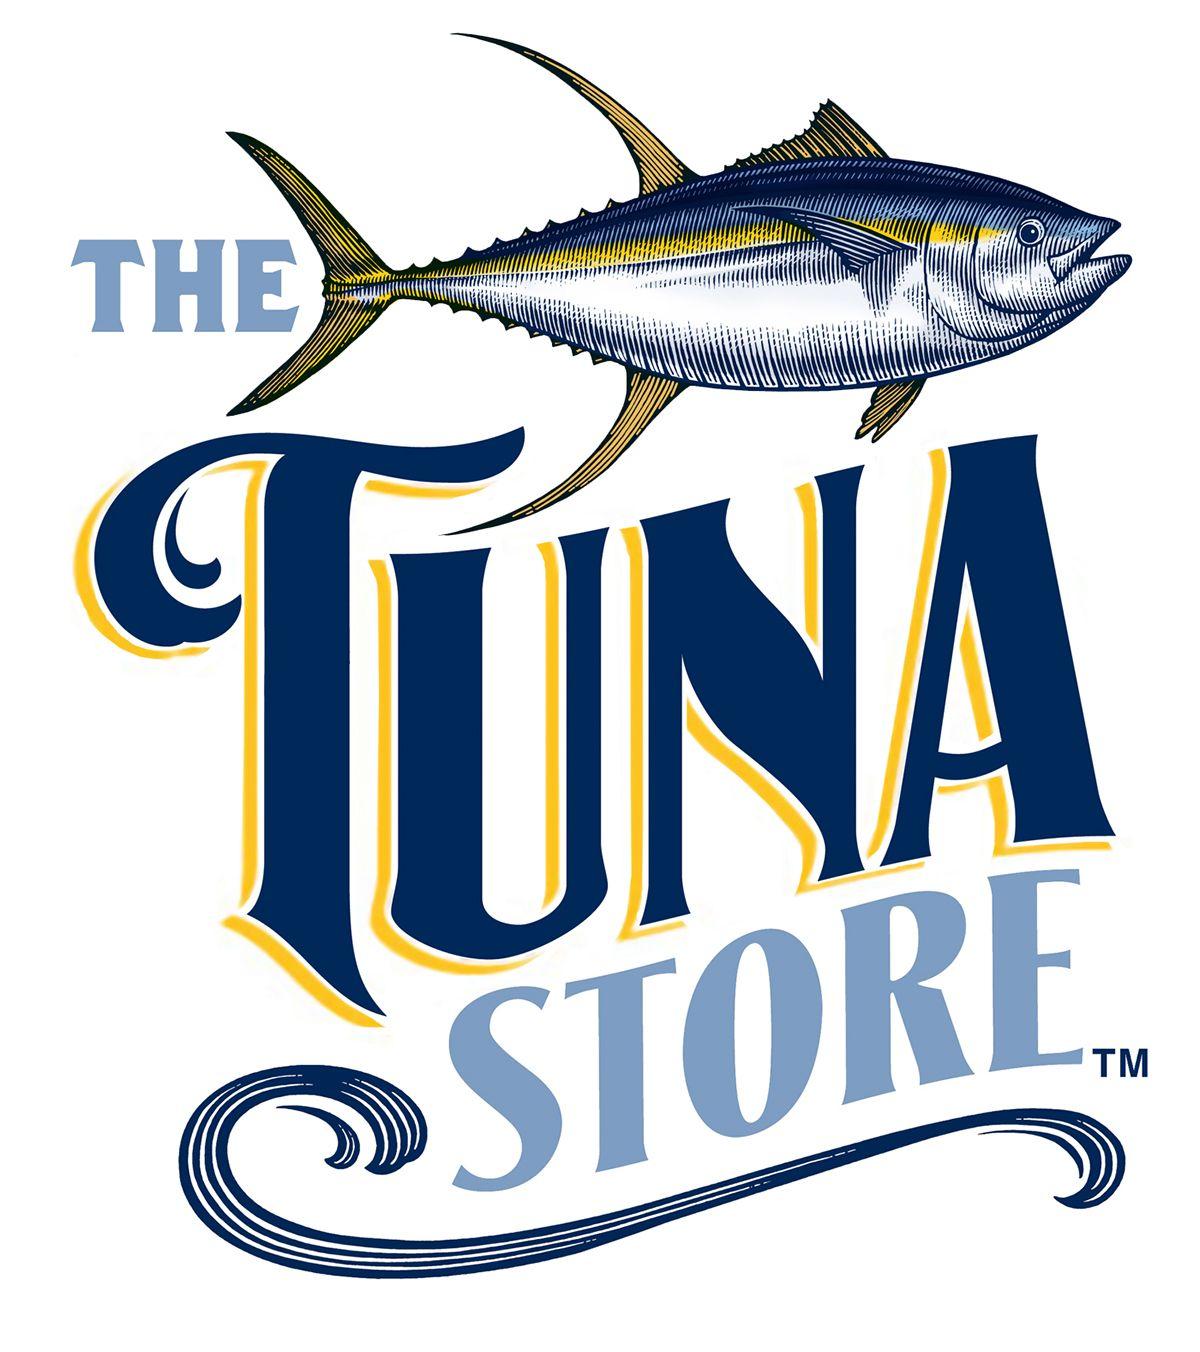 Tuna Logo - The Tuna Store Logo Illustrated